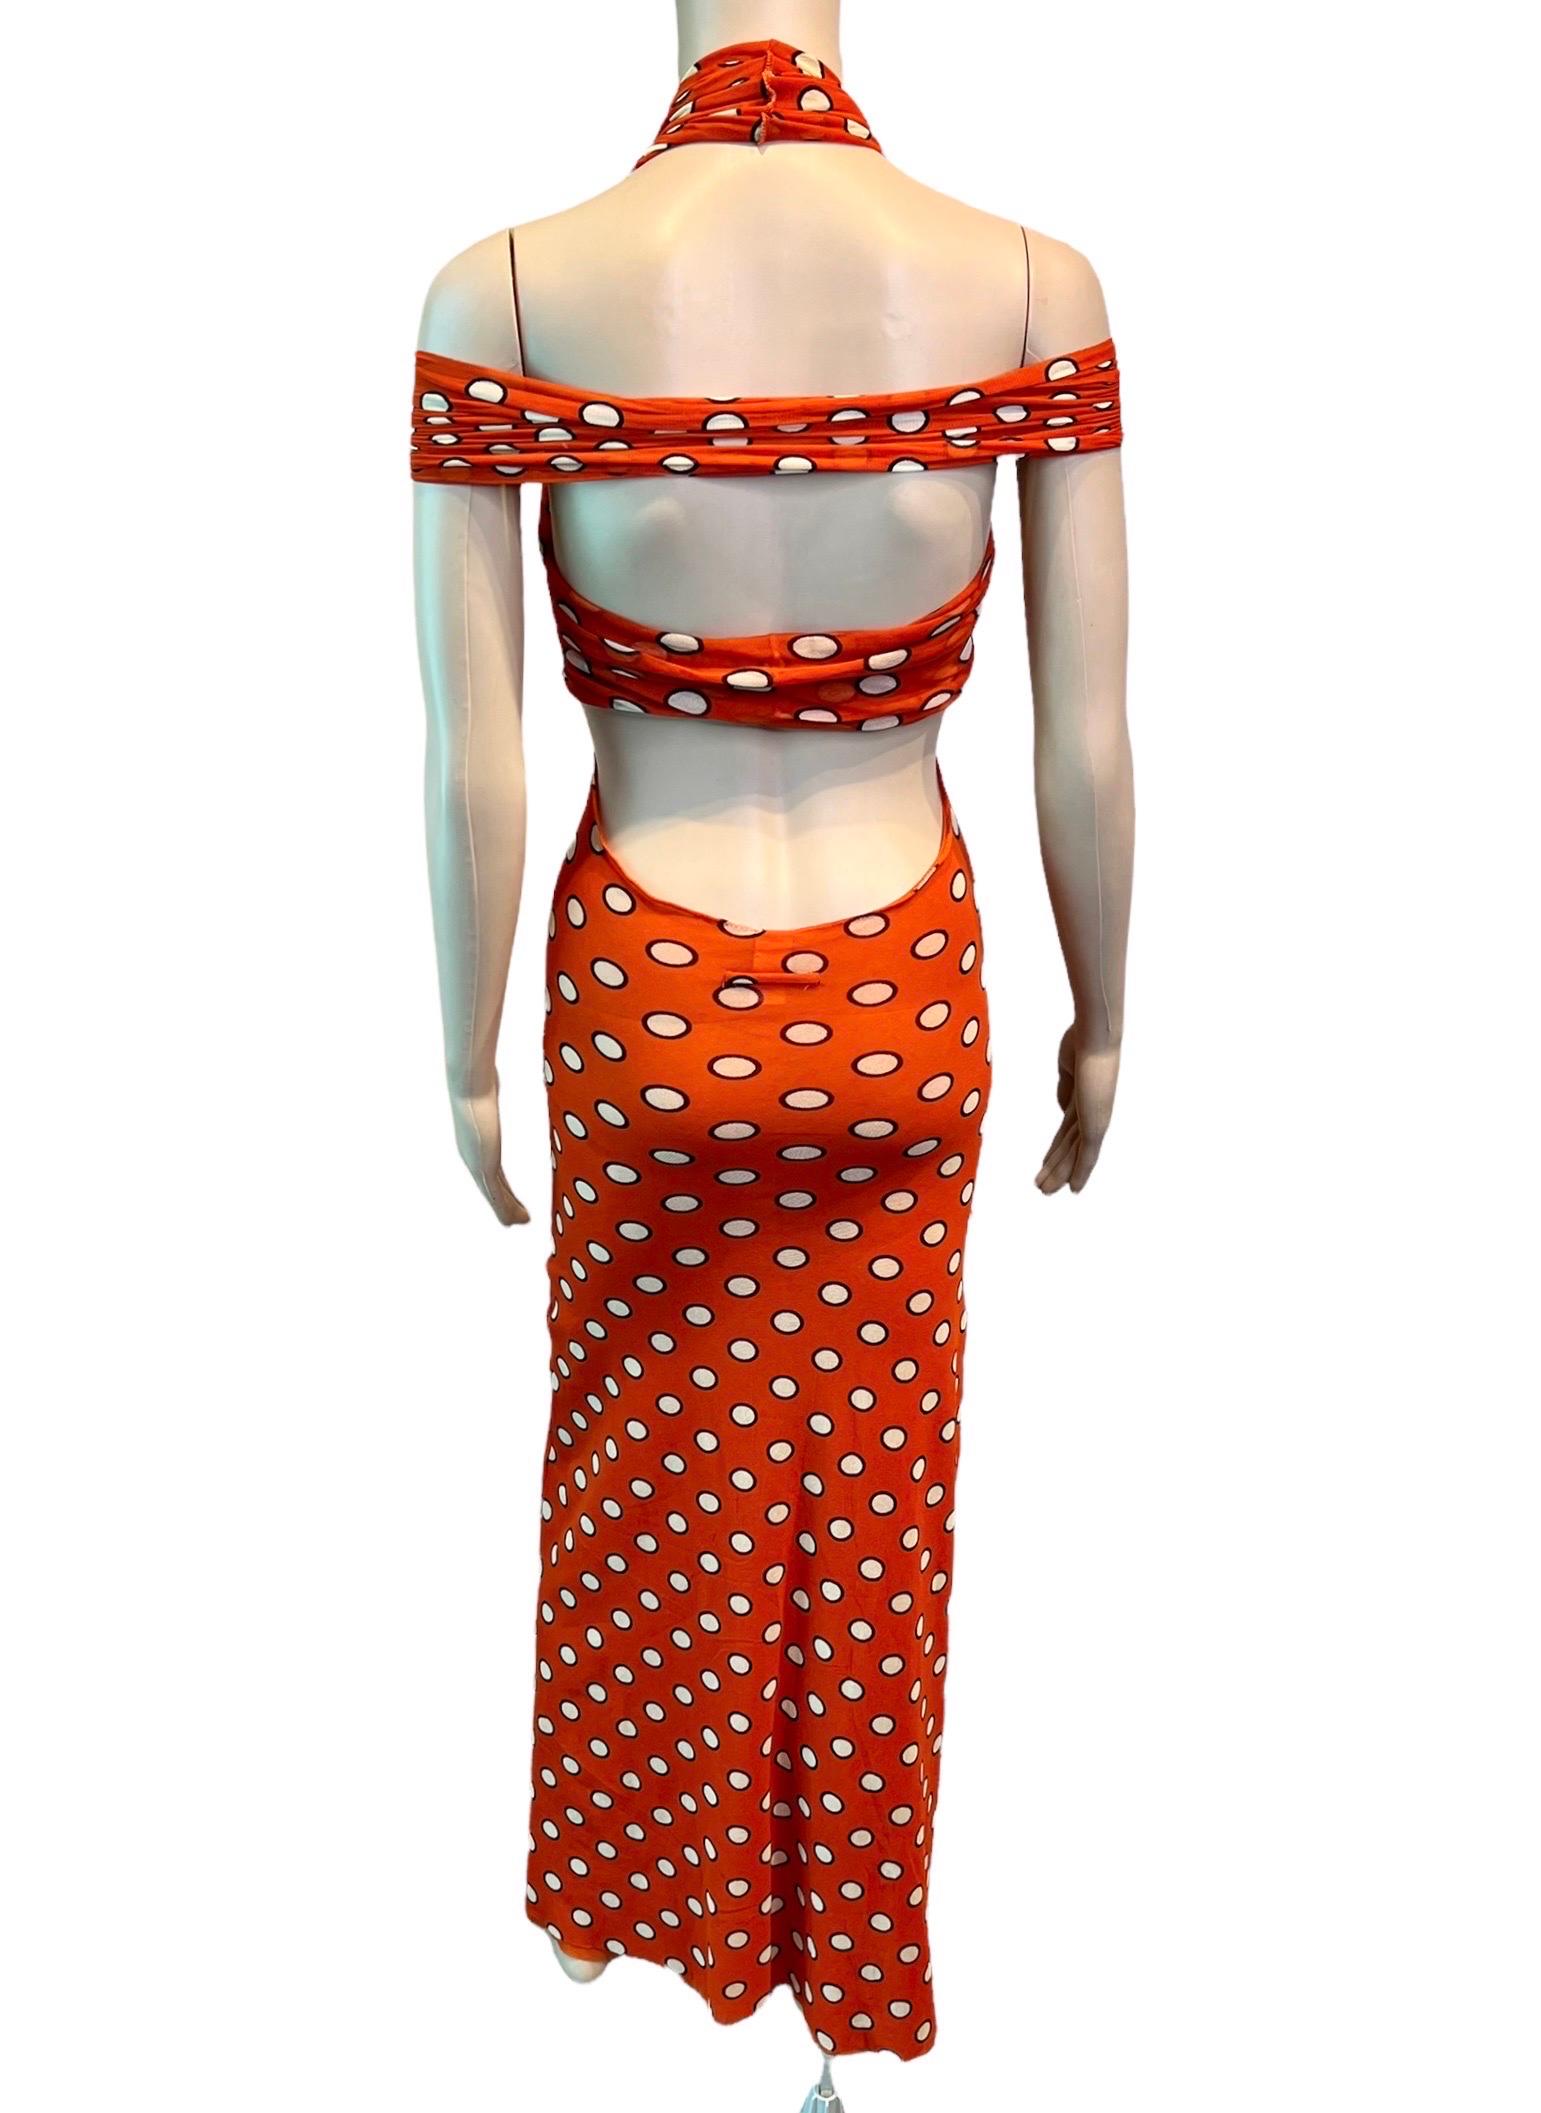 Jean Paul Gaultier Soleil S/S 1999 Cutout Polka Dot Mesh Bodycon Maxi Dress For Sale 1